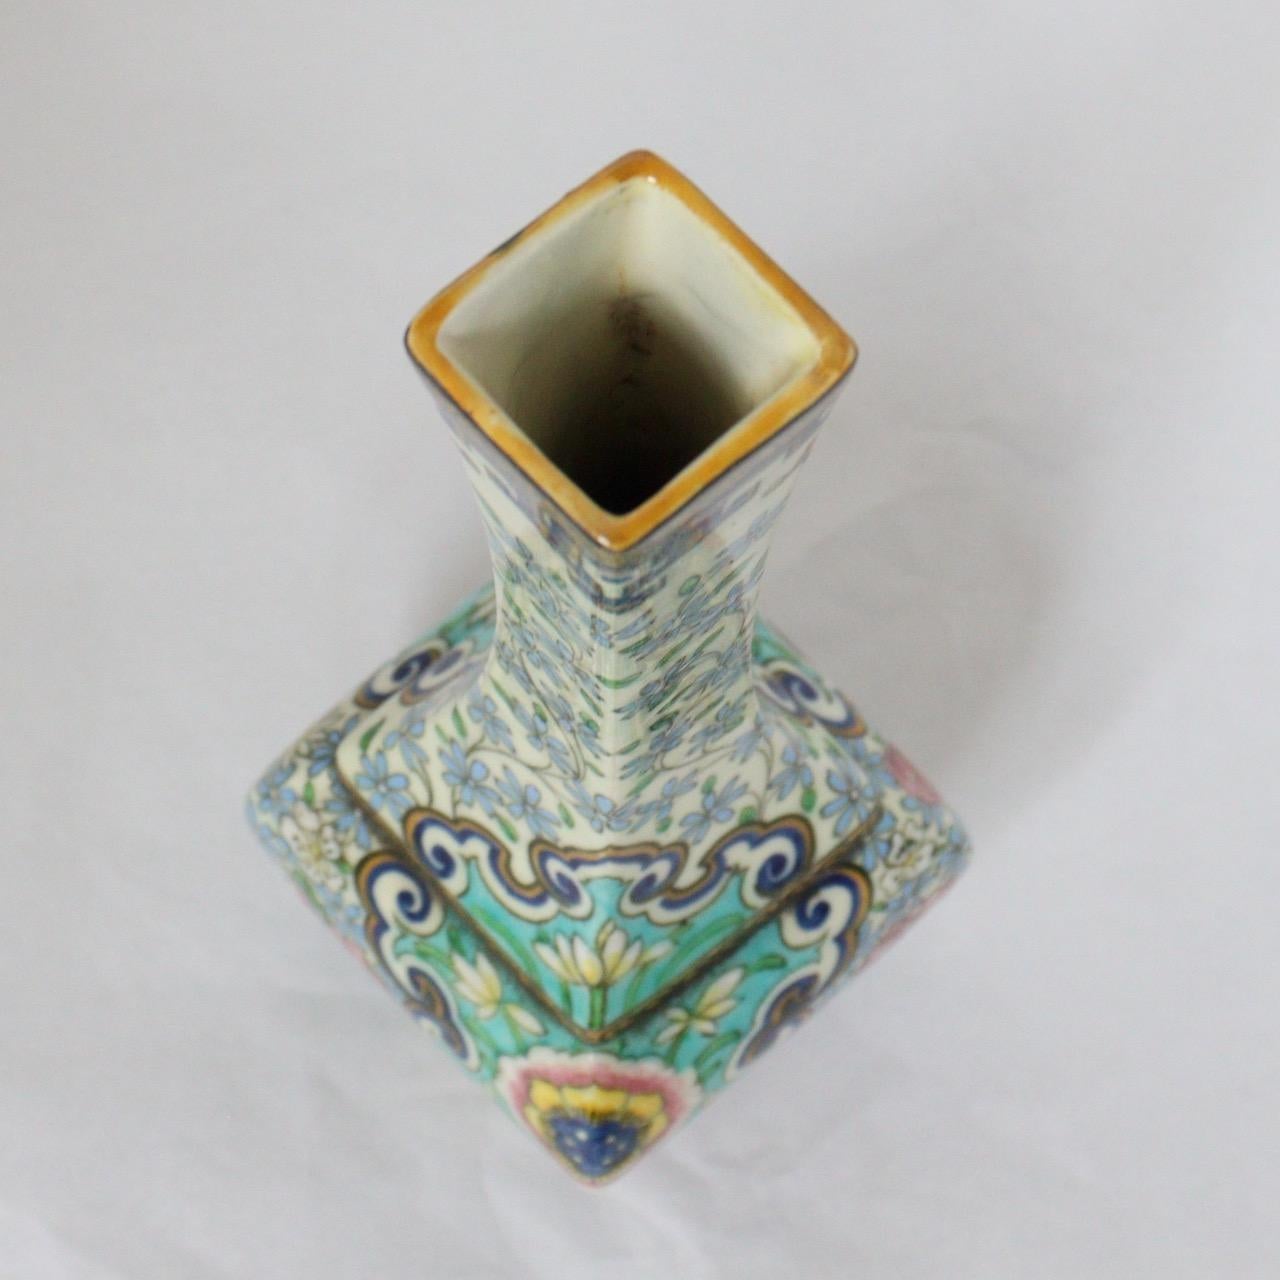 Enameled A Théodore Deck (1823-1891) Enamelled Faience Soliflore Vase circa 1875